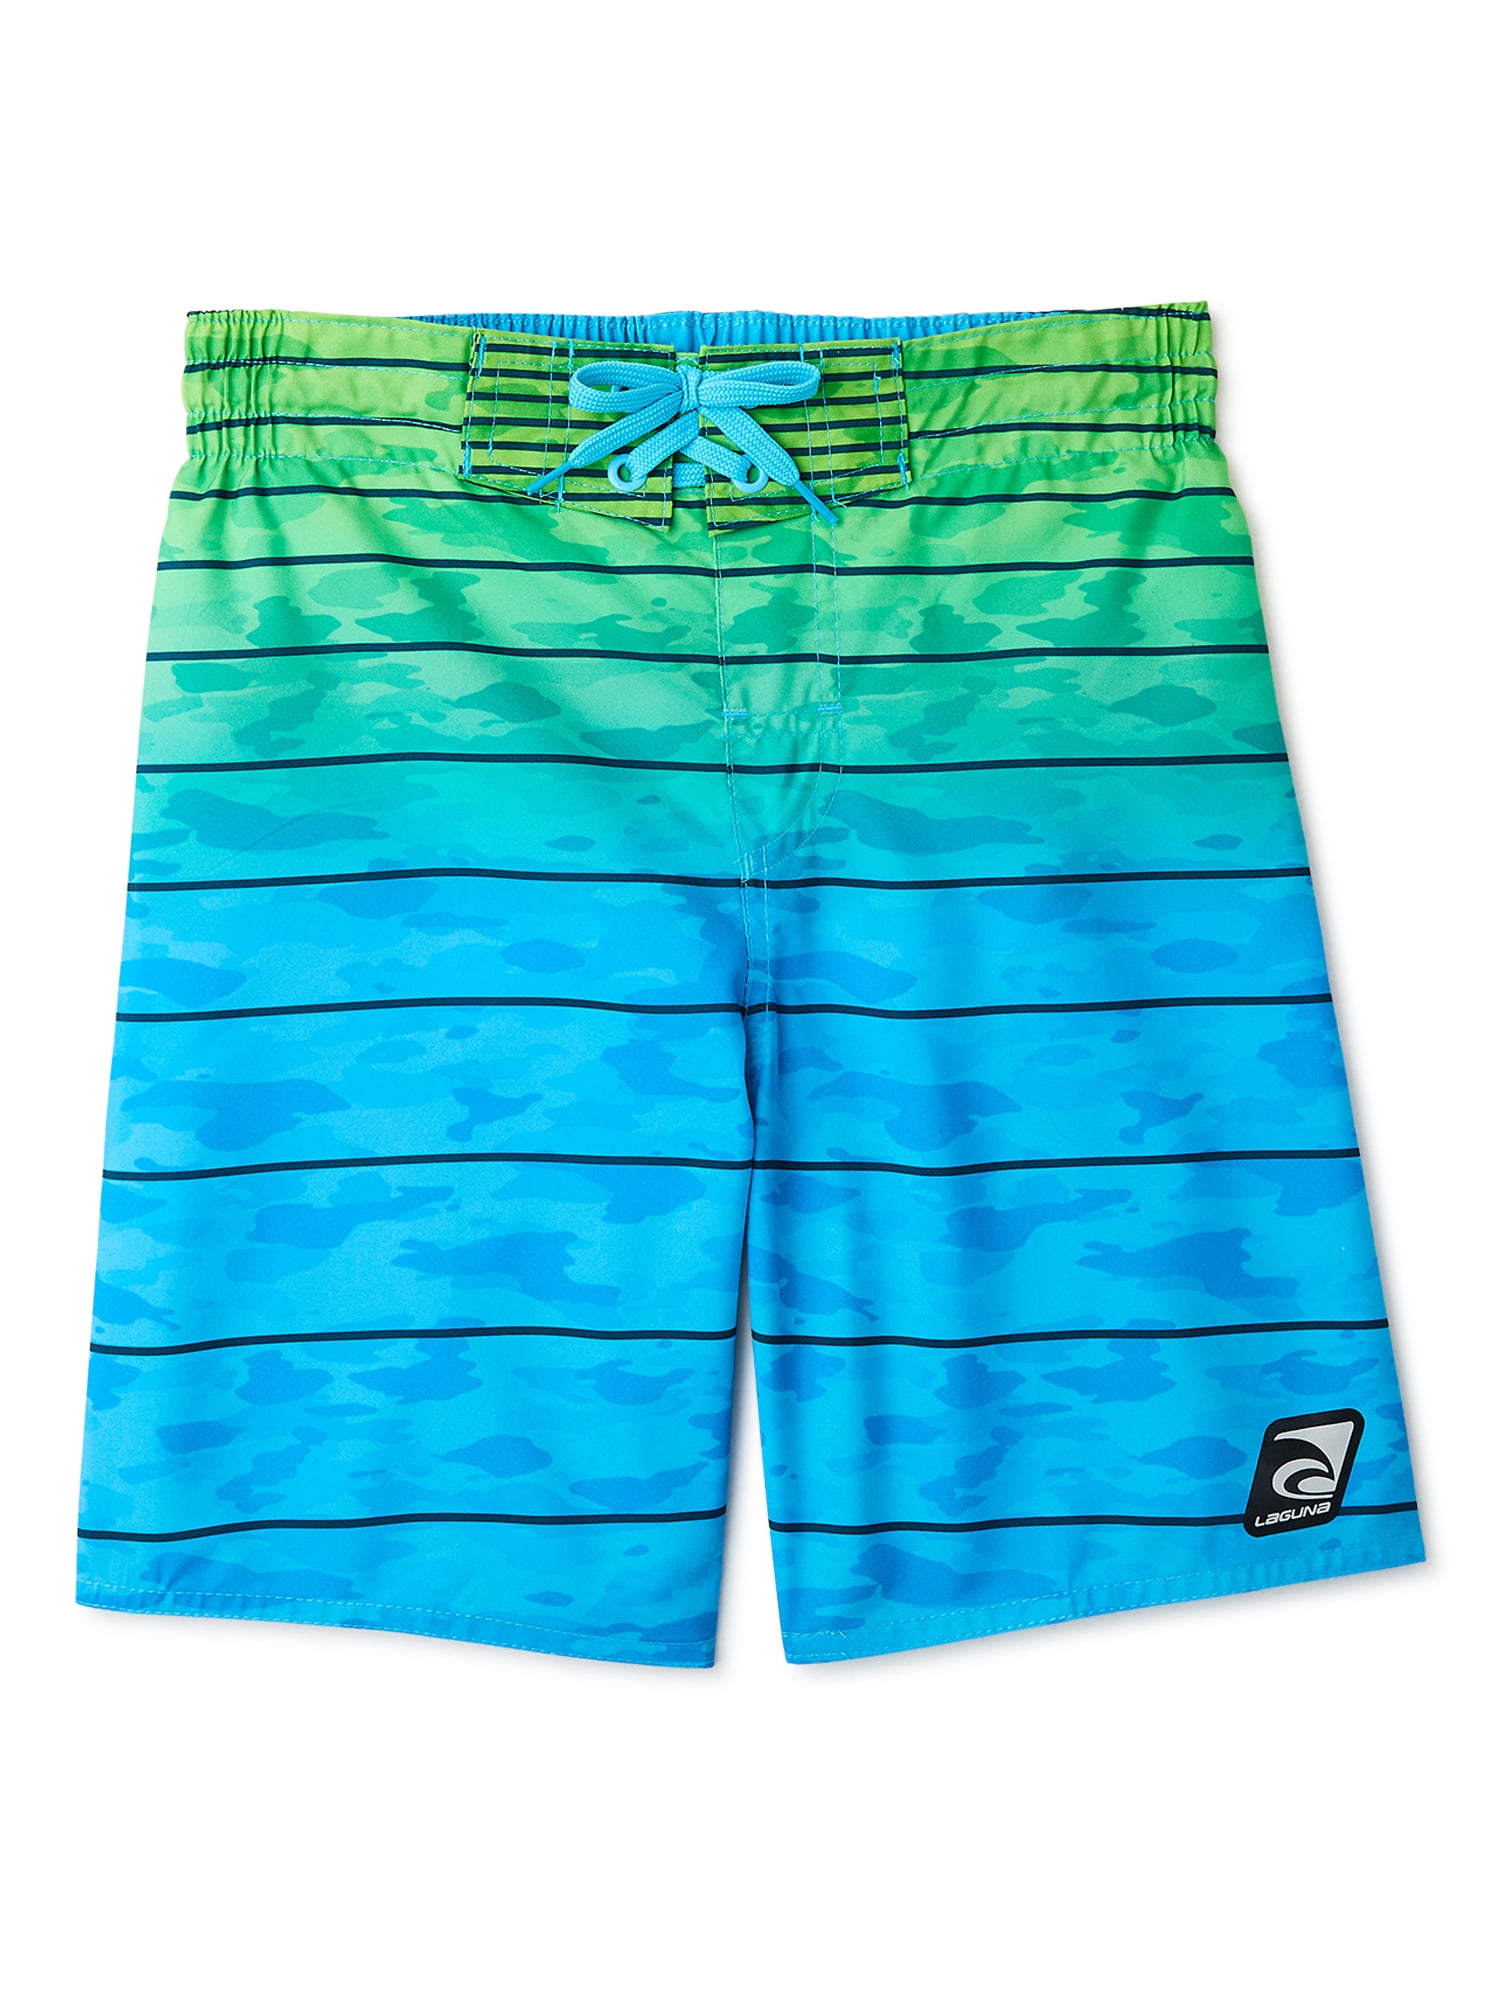 NWT Boys Laguna Board Shorts Swim Trunk Blue Striped Summer Beach Fun Water wear